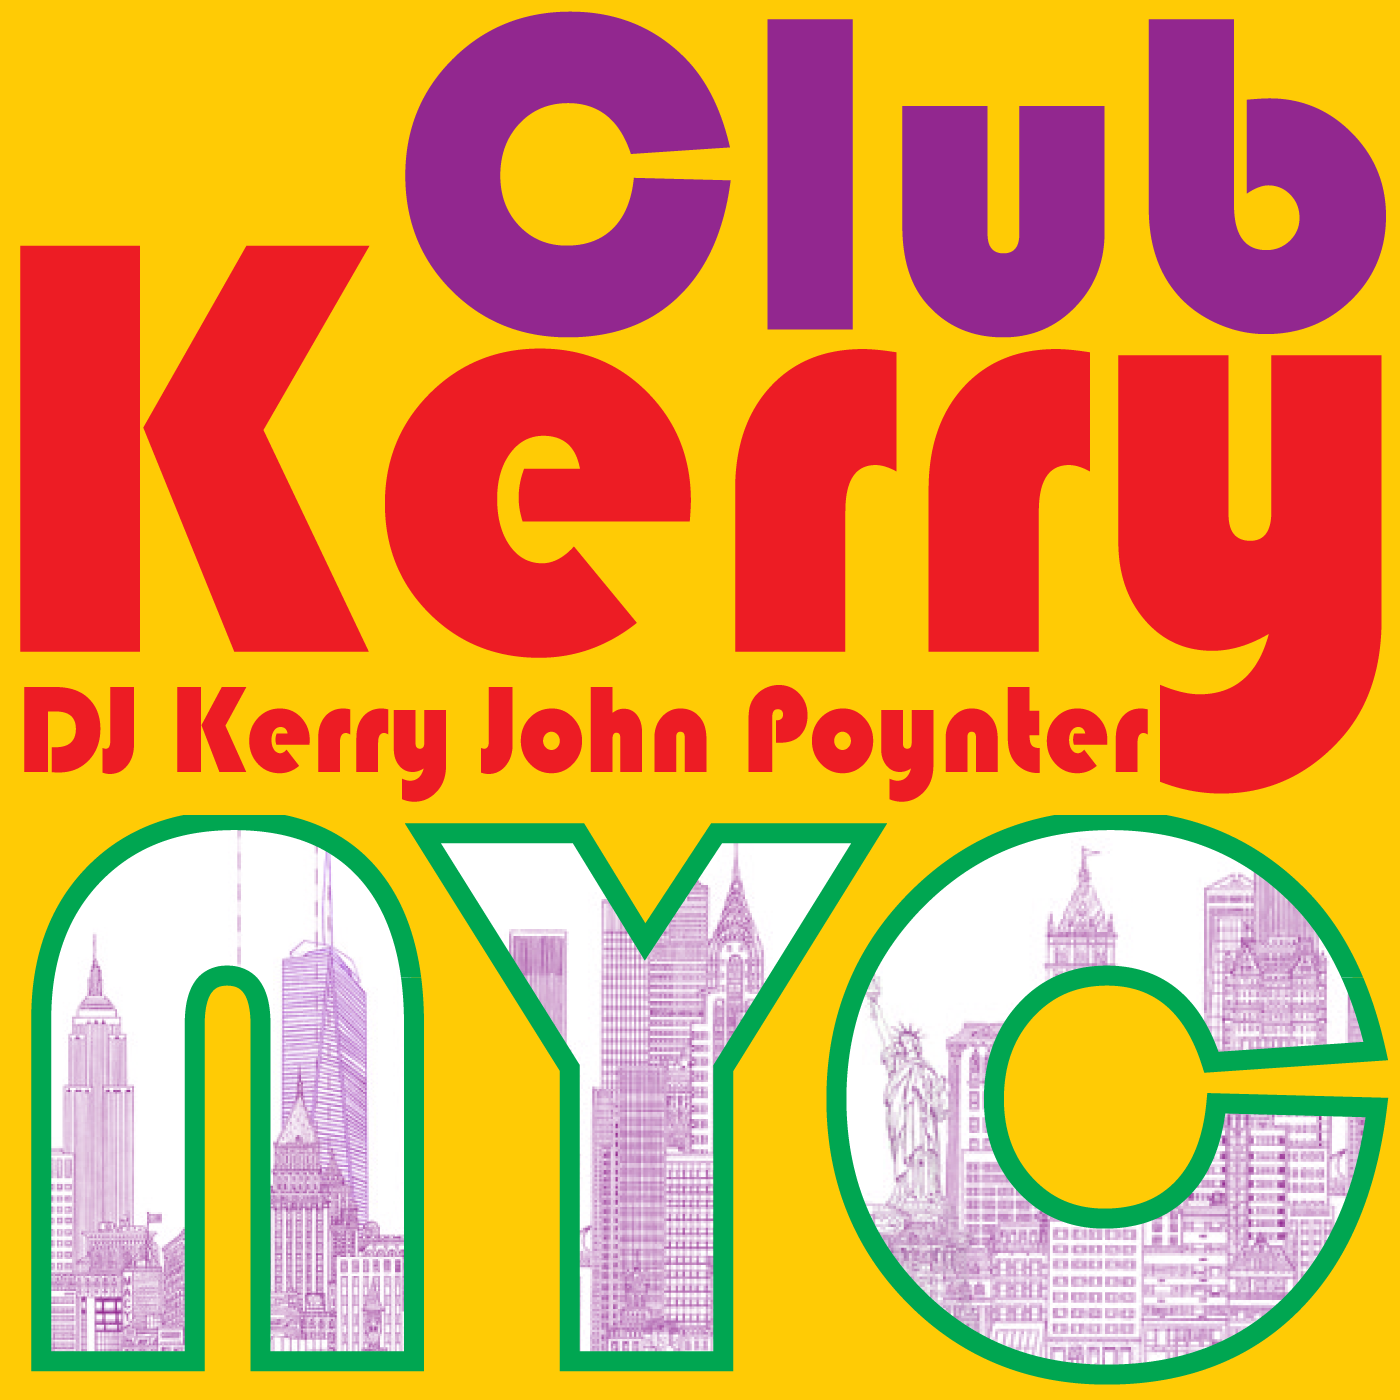 A highlight from Retro Fusion 15 (Vocal House, Dance, Deep House, Melodic House) - DJ Kerry John Poynter